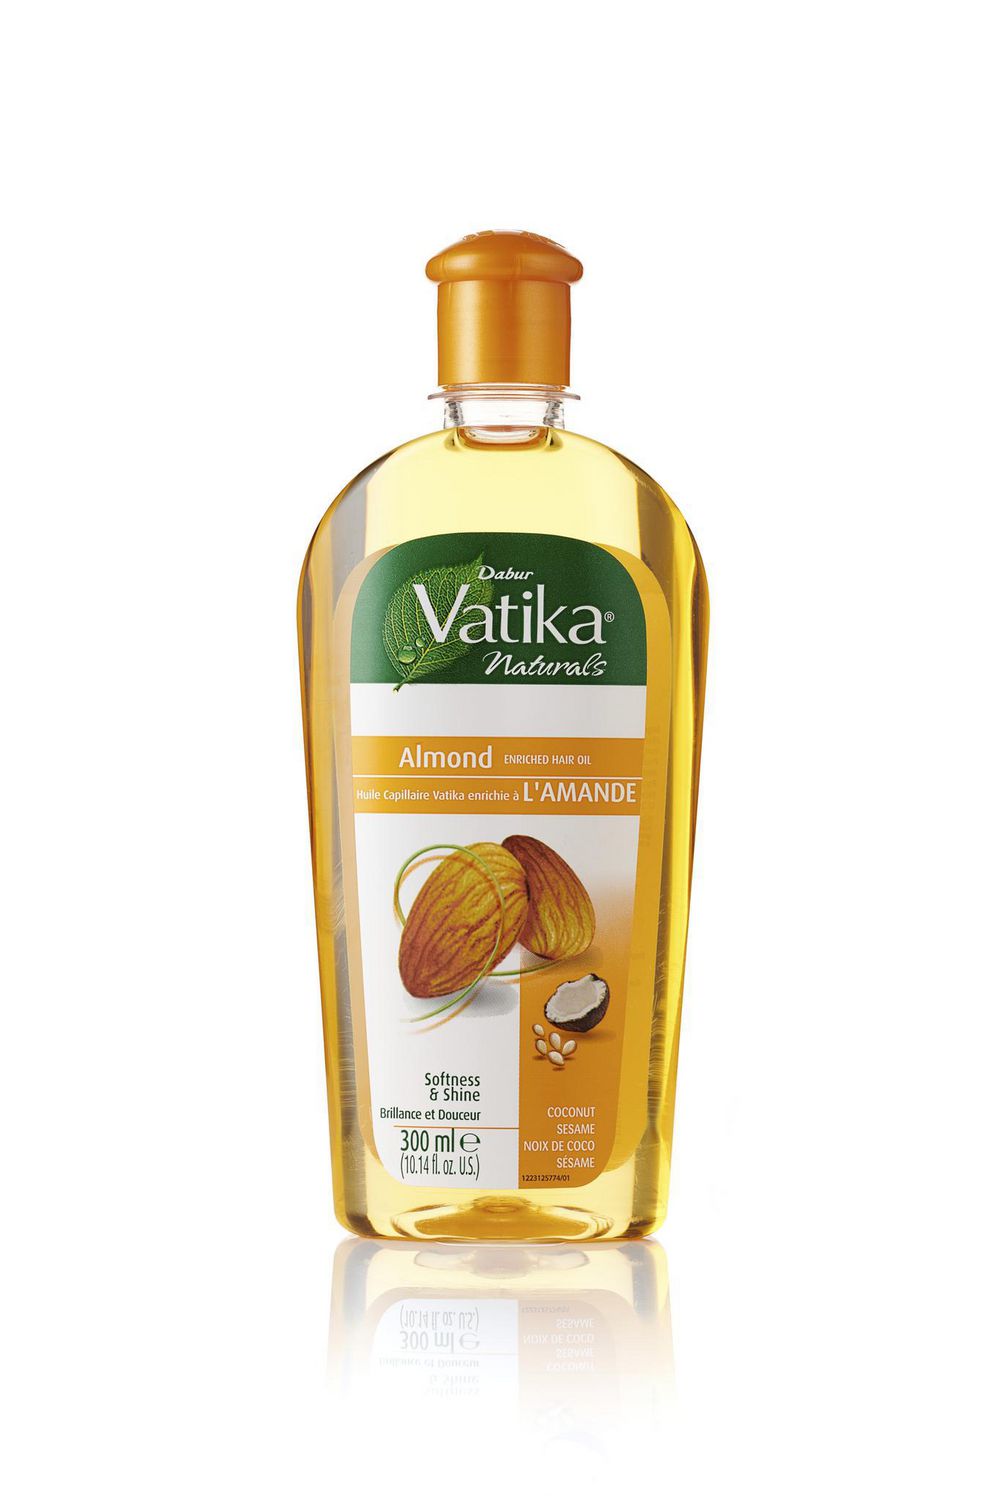 Dabur Vatika Enriched Almond Hair Oil Review  Glossypolish